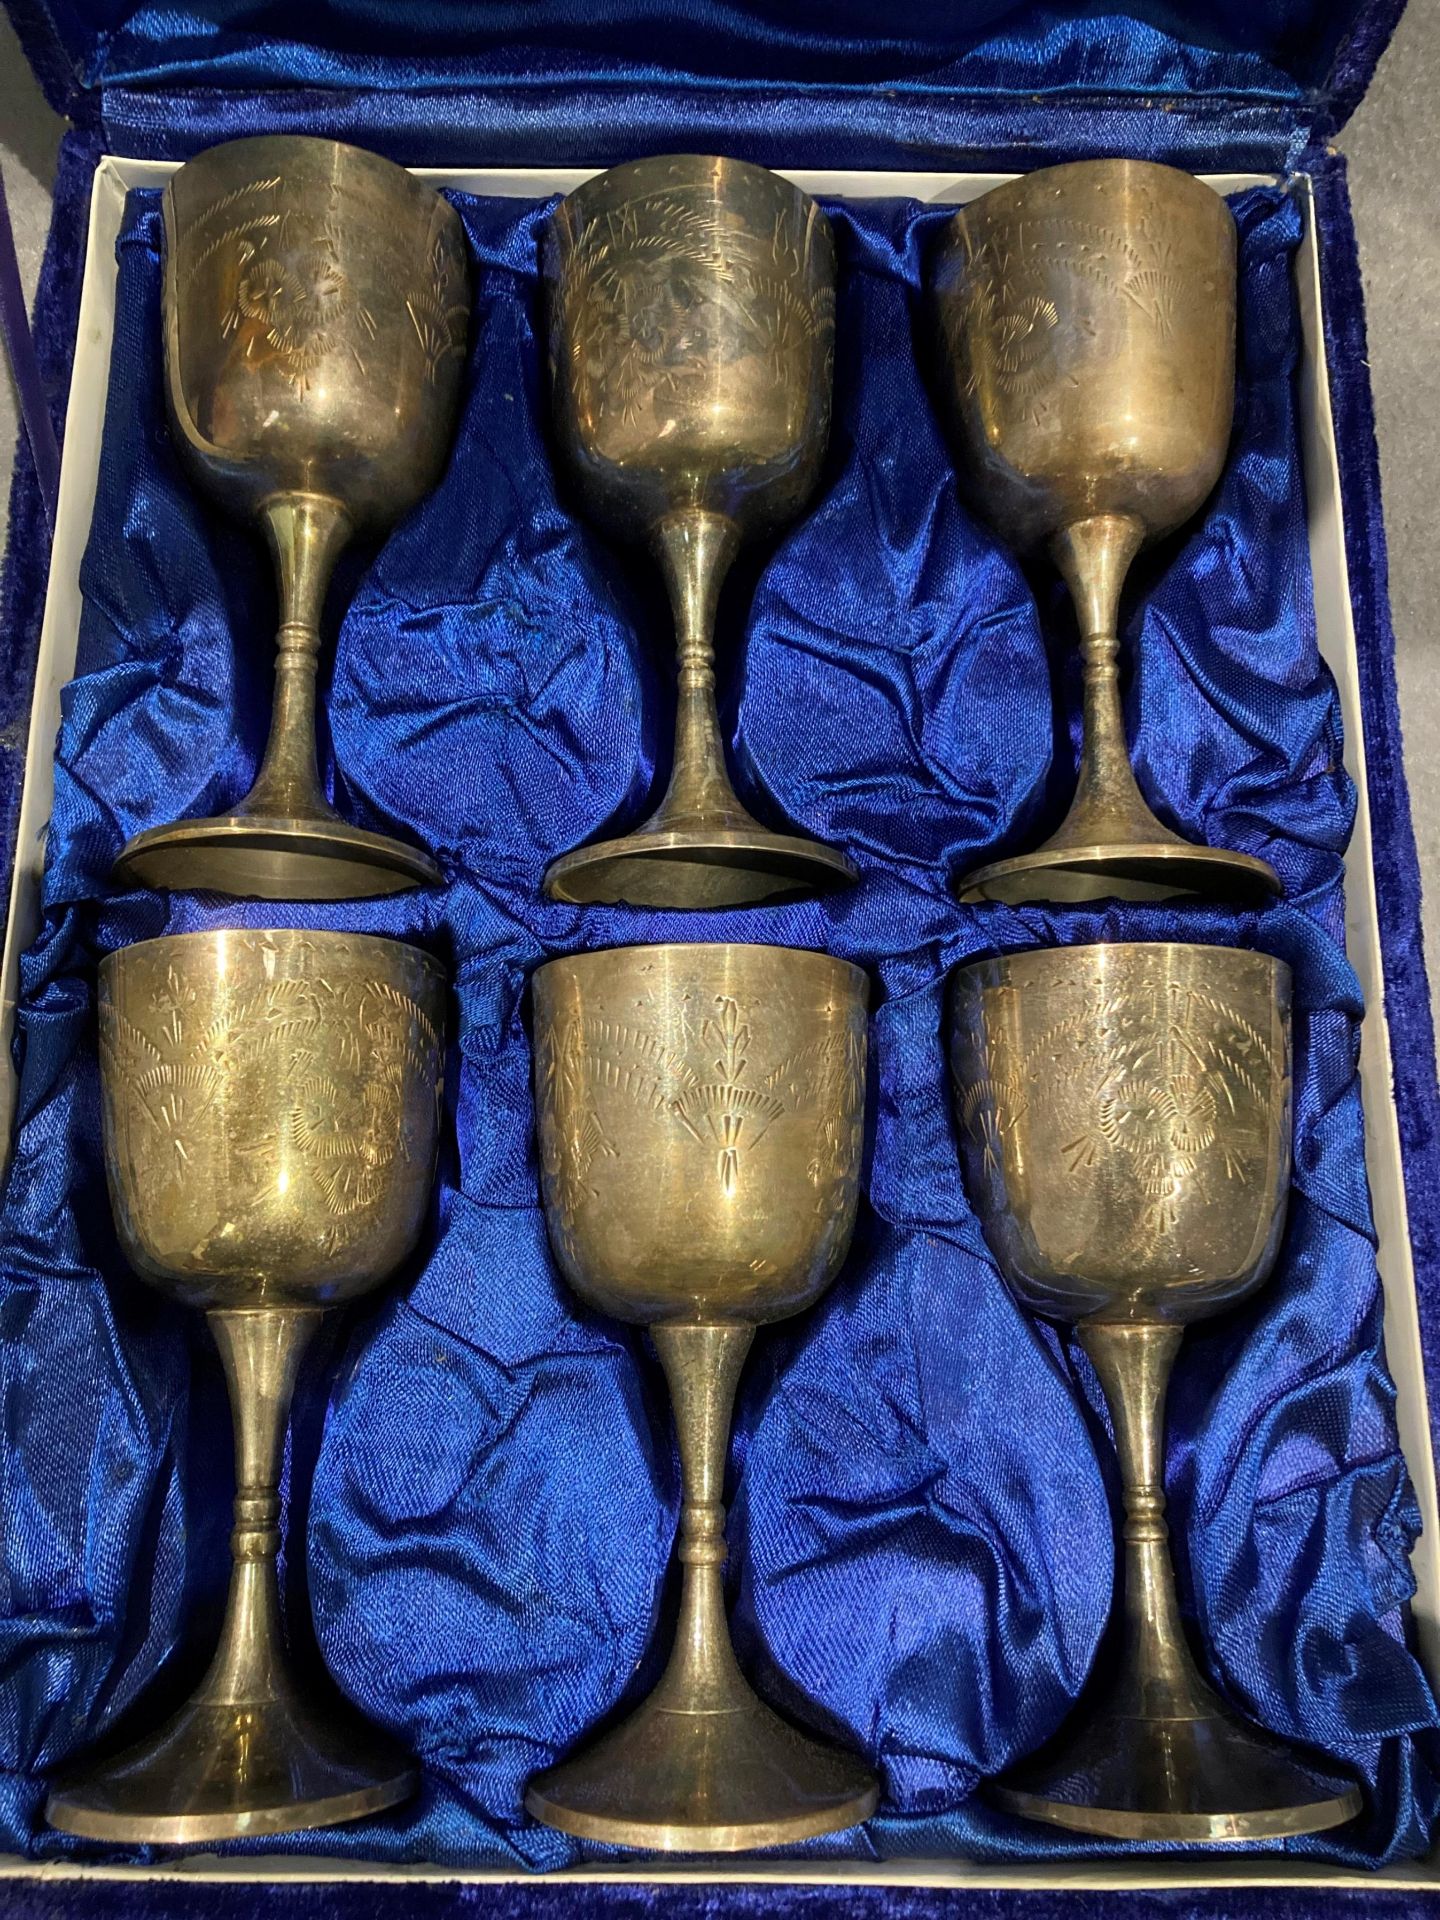 A set of six engraved plated goblets in blue velvet finish case - Image 2 of 2